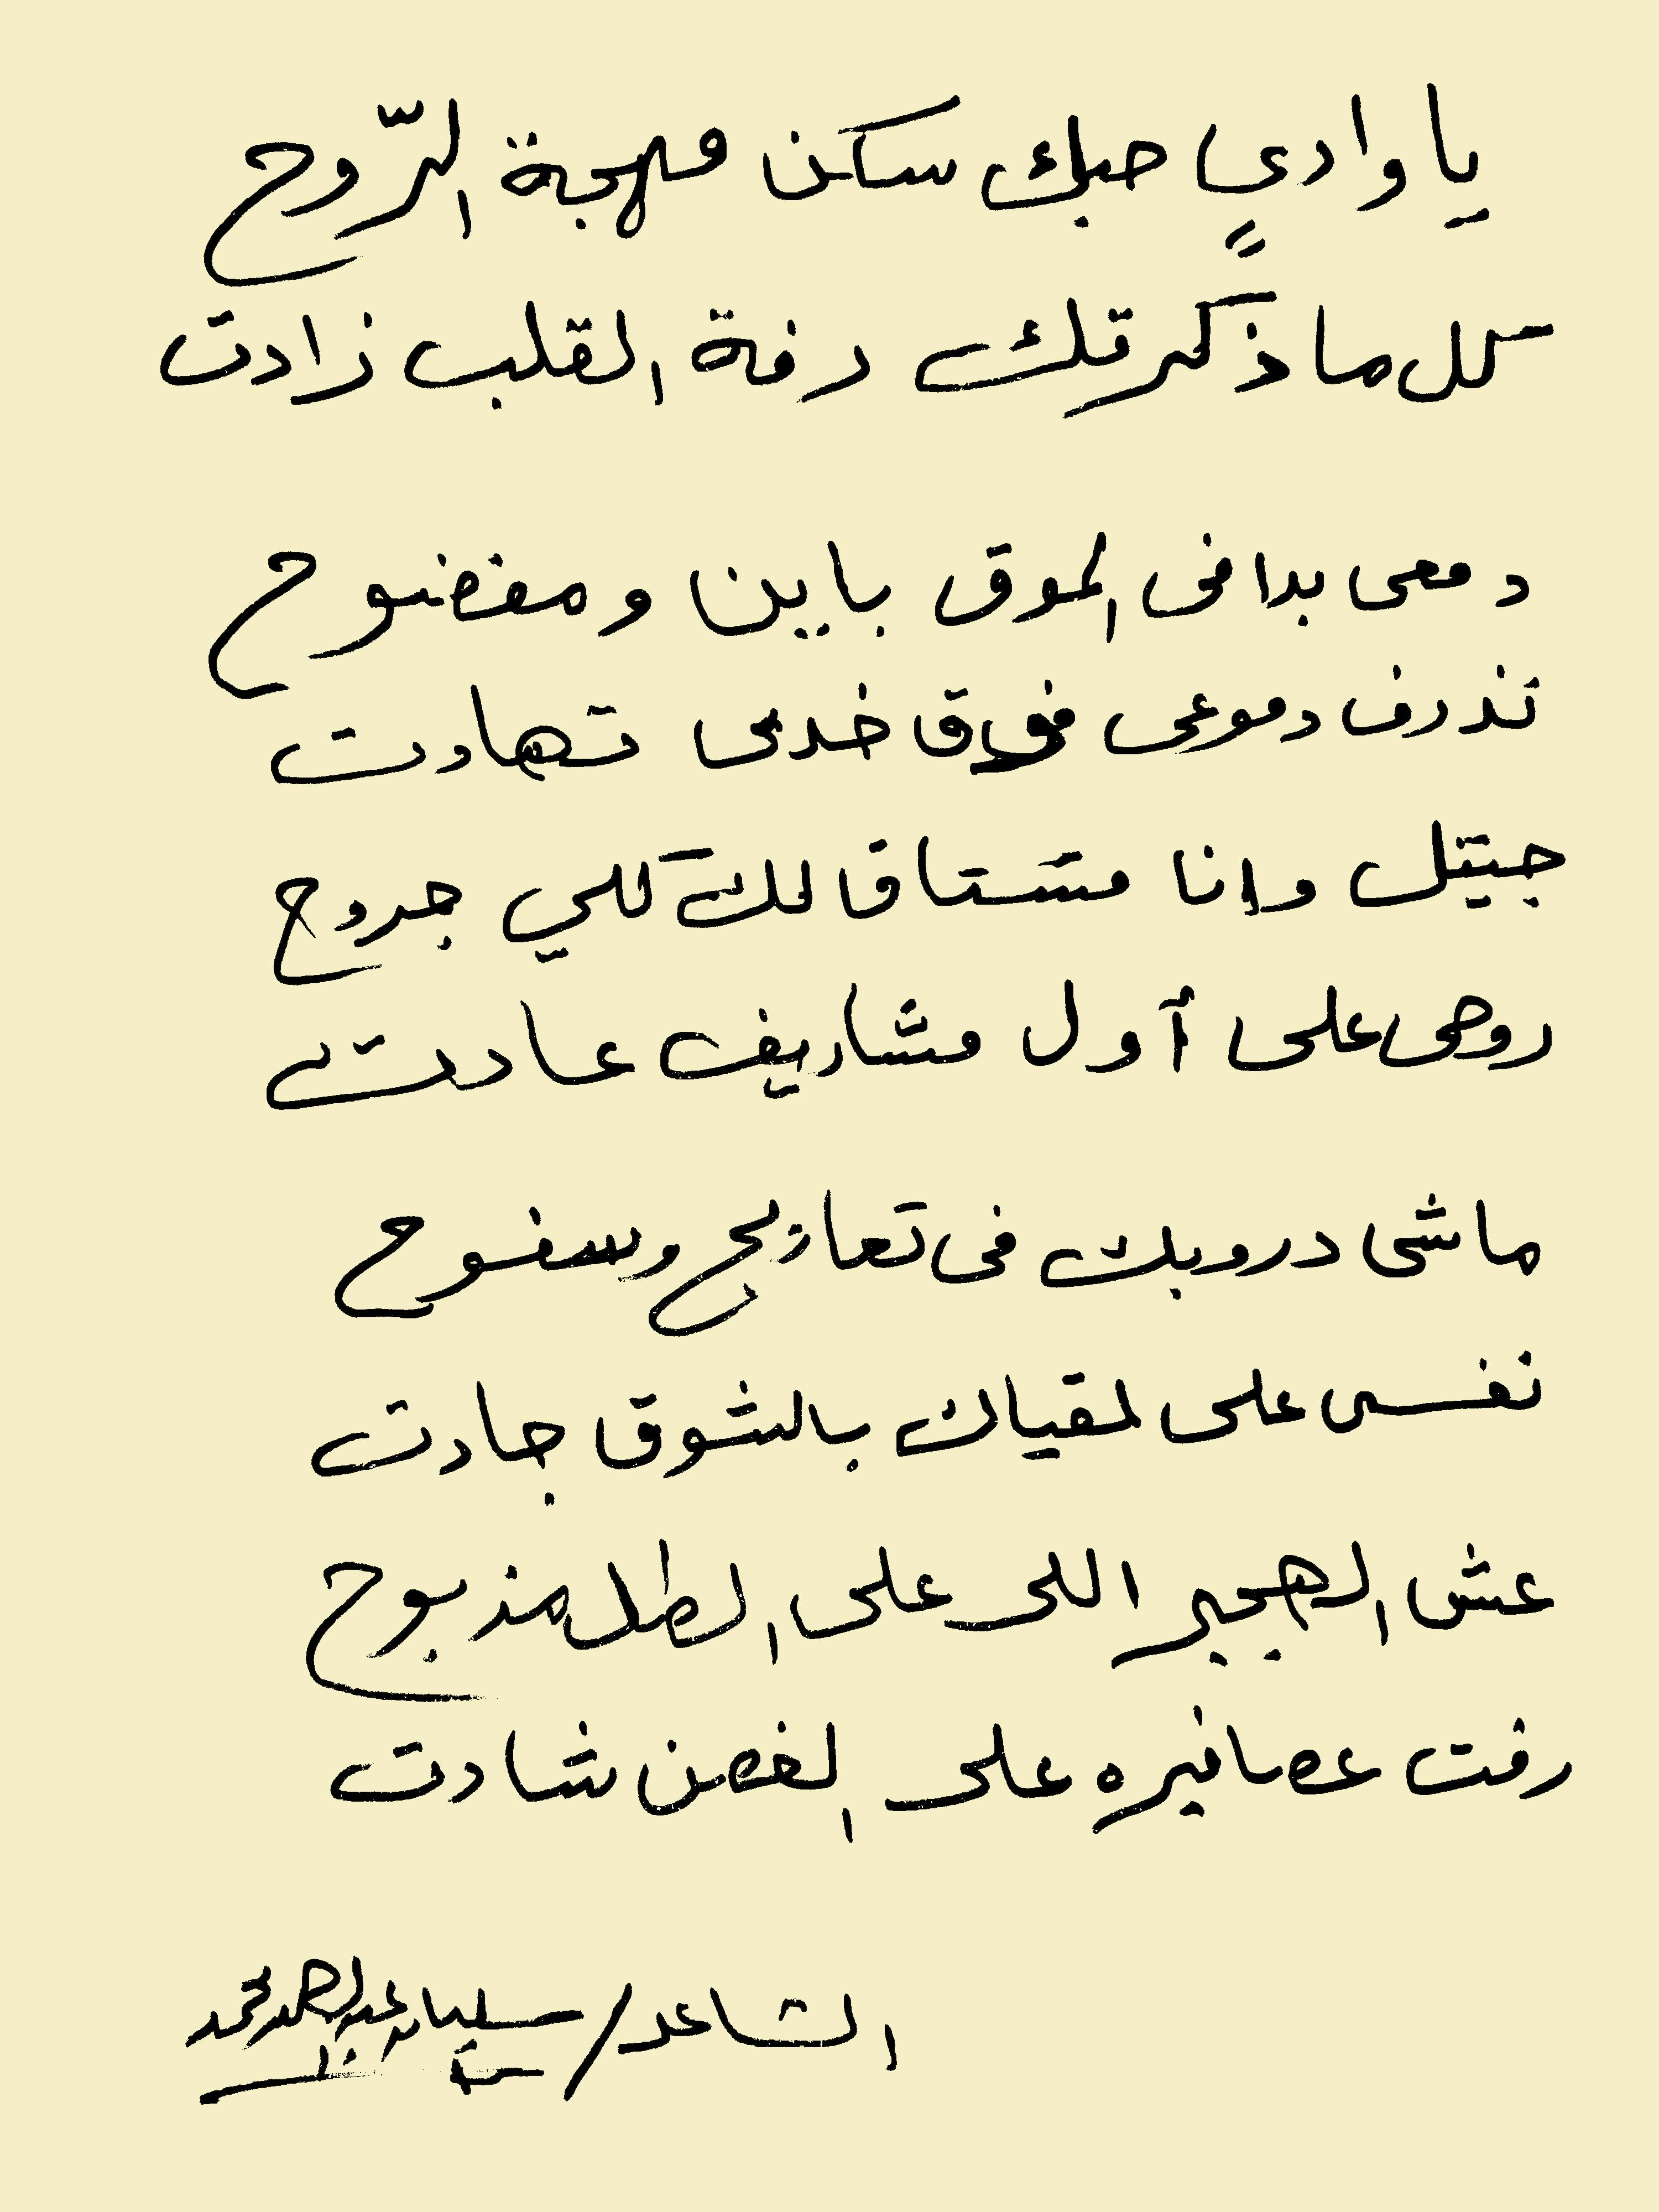 Arabic writing of the poem 'Oh Valley' by Seliman Abdel Rahman. © Rehab Eldalil